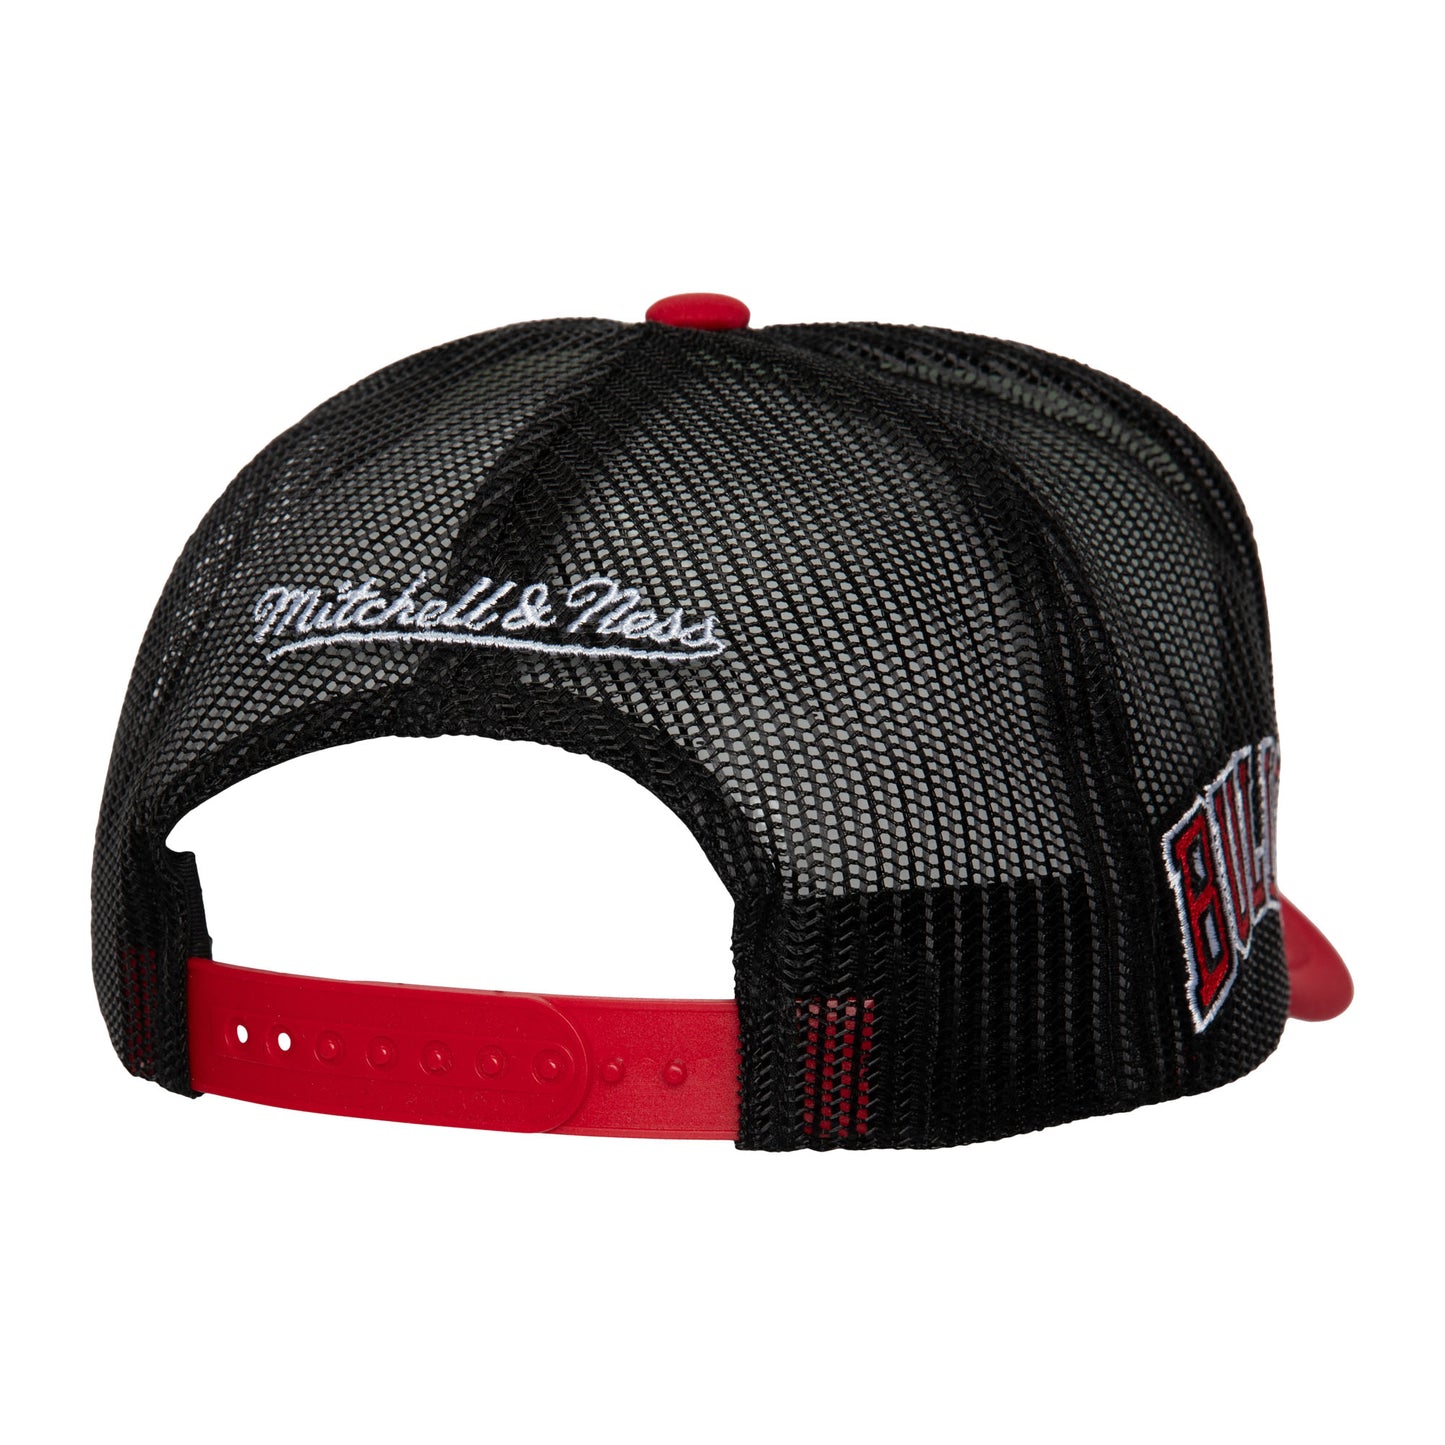 Chicago Bulls Mitchell & Ness Blocker Foam Trucker Snap Back Hat